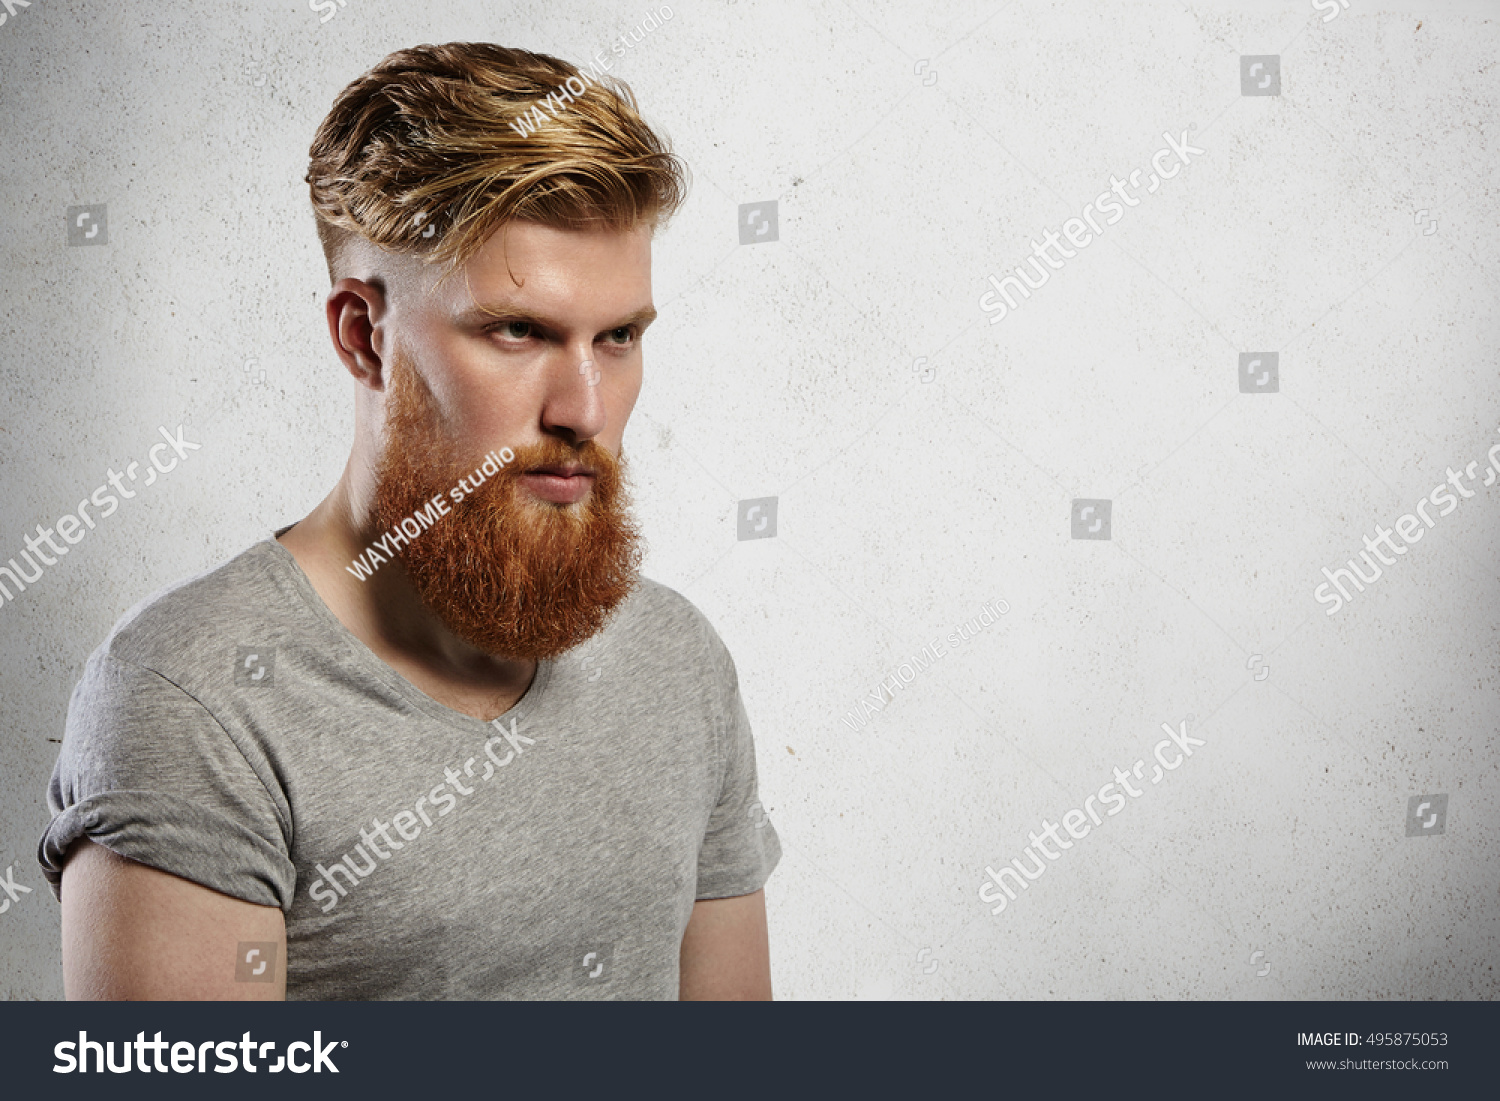 563 Long hair undercut Images, Stock Photos & Vectors | Shutterstock